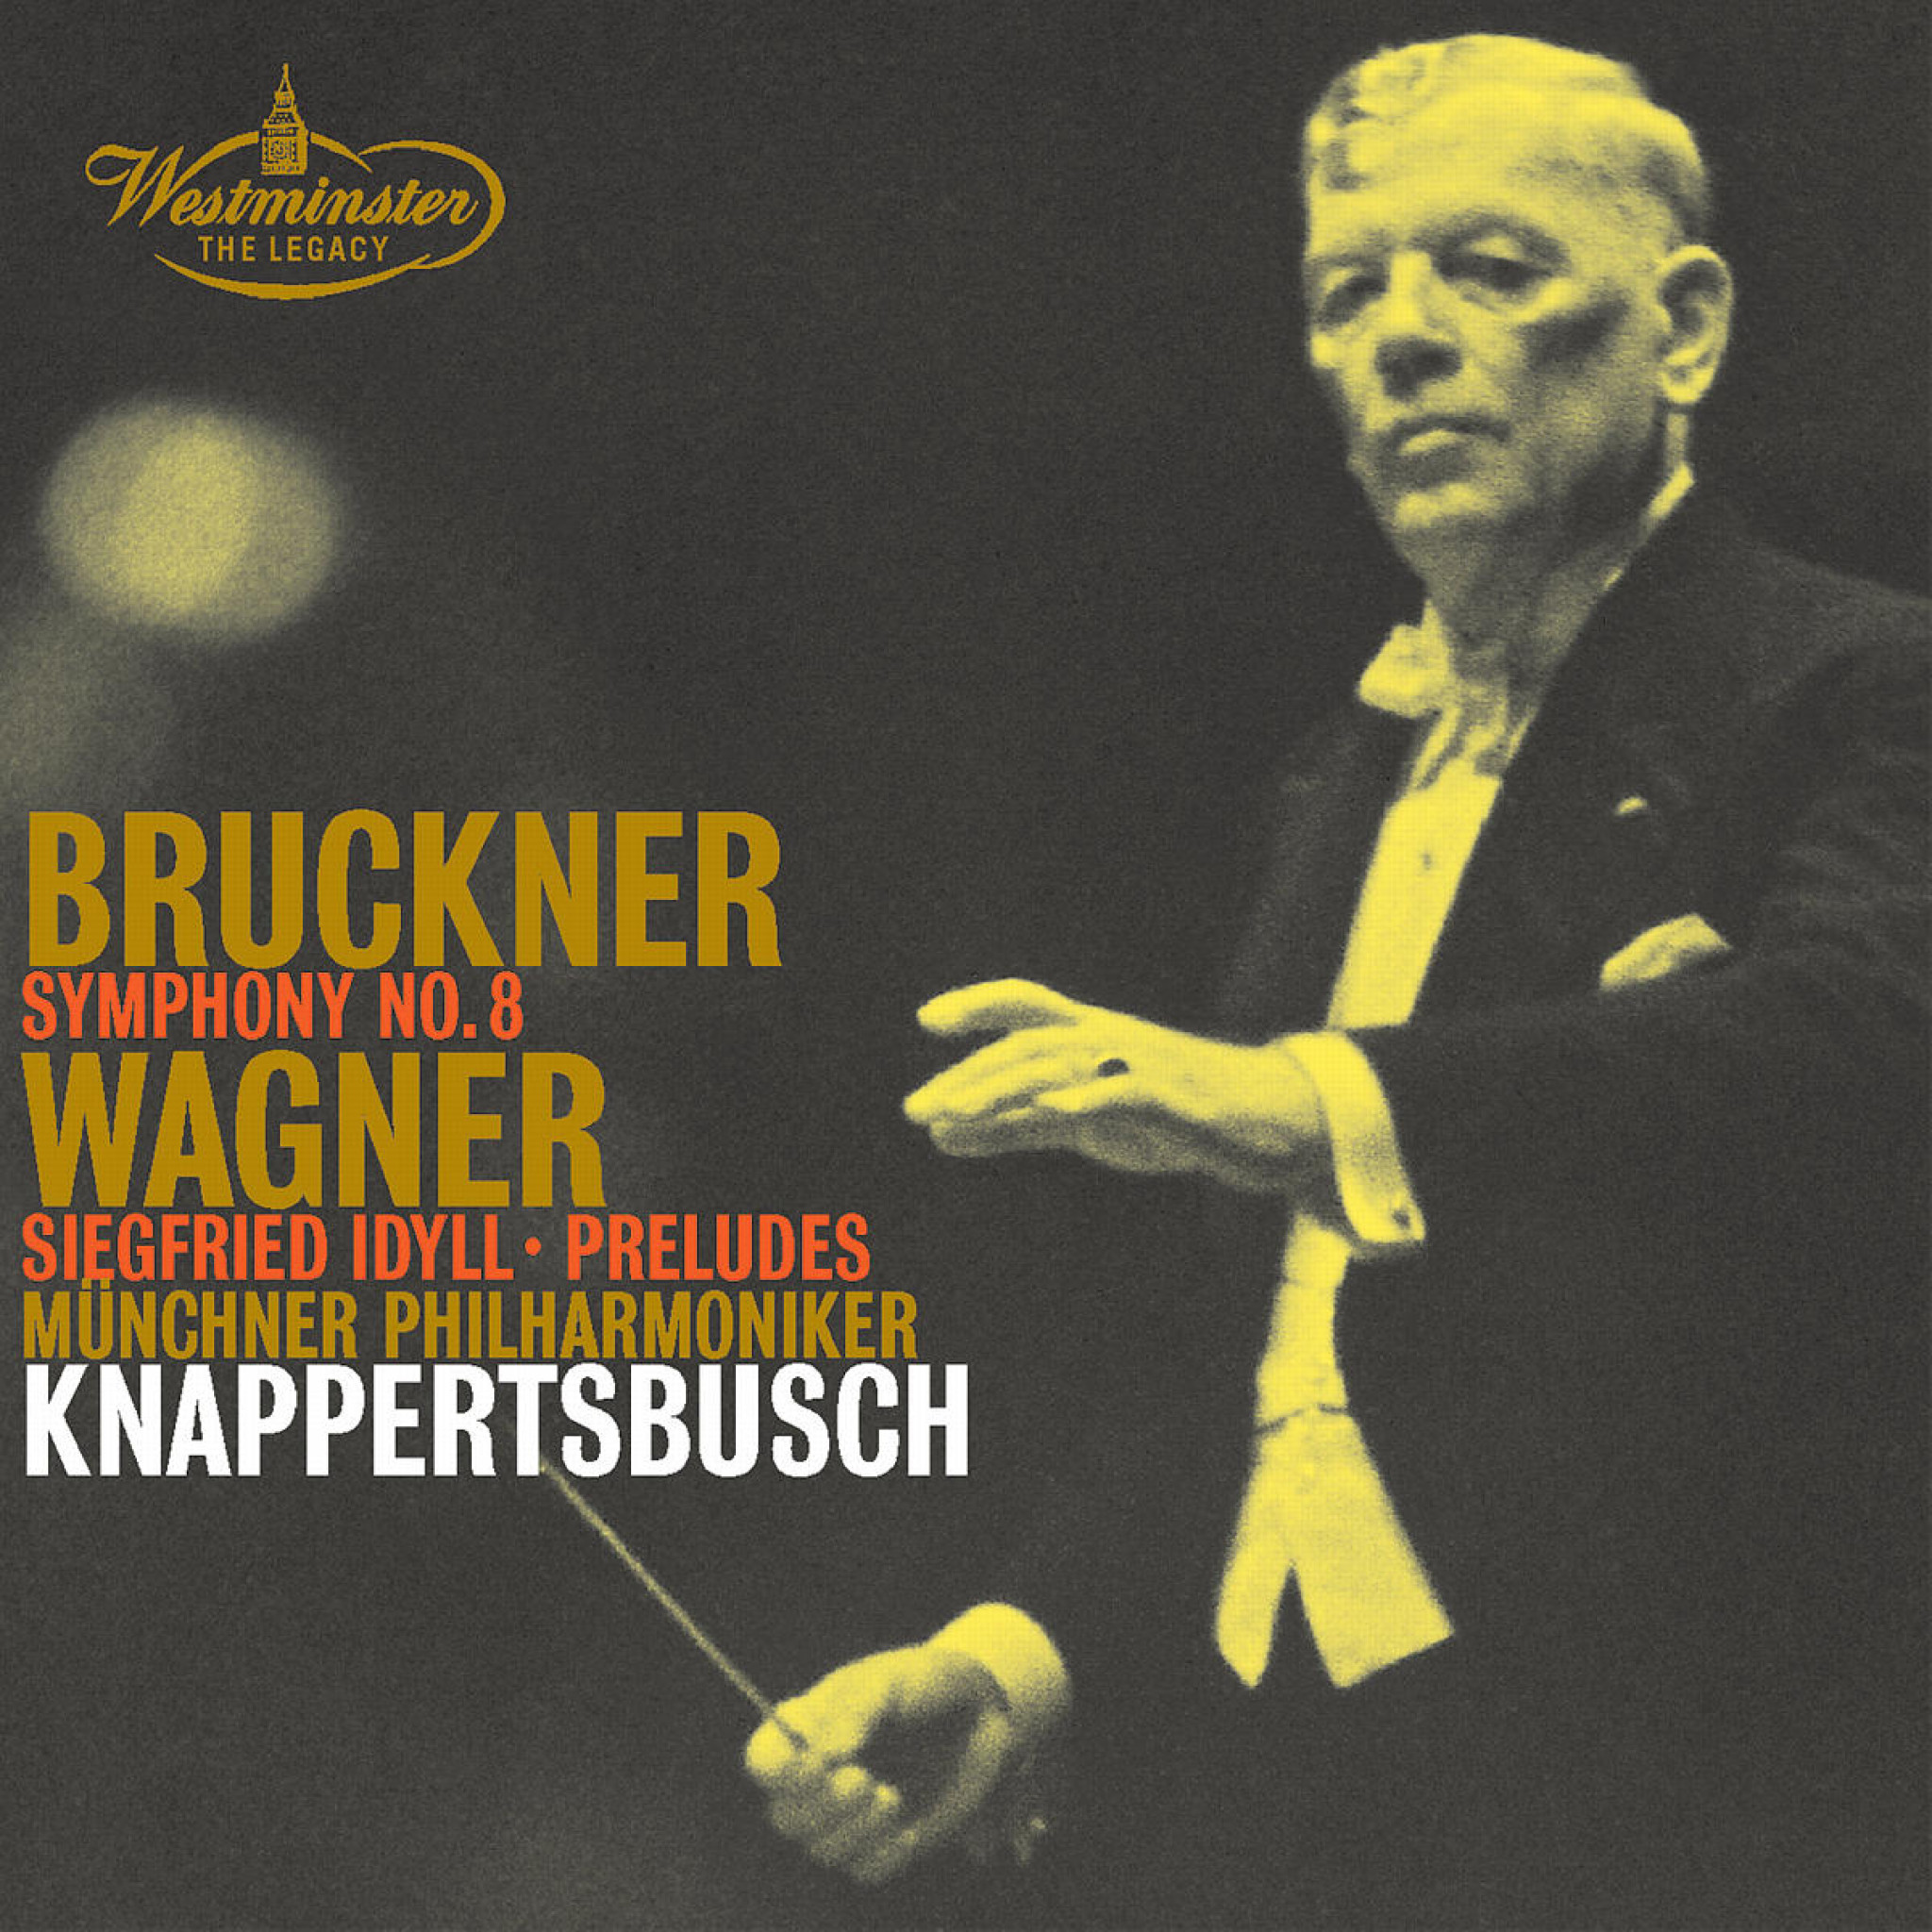 BRUCKNER Symphony No. 8 + WAGNER / Knappertsbusch